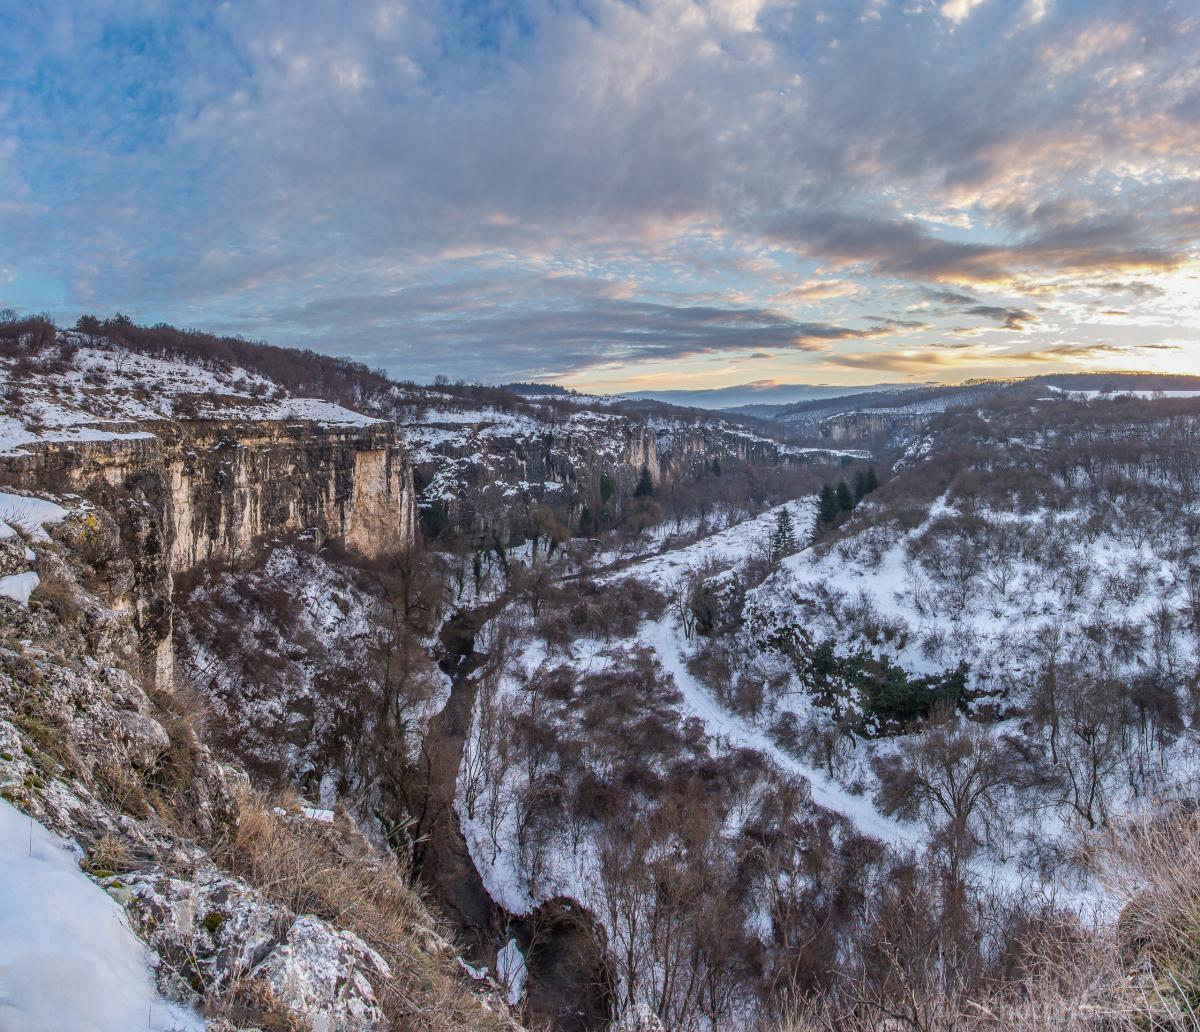 Image of Chernelka Canyon by Dancho Hristov